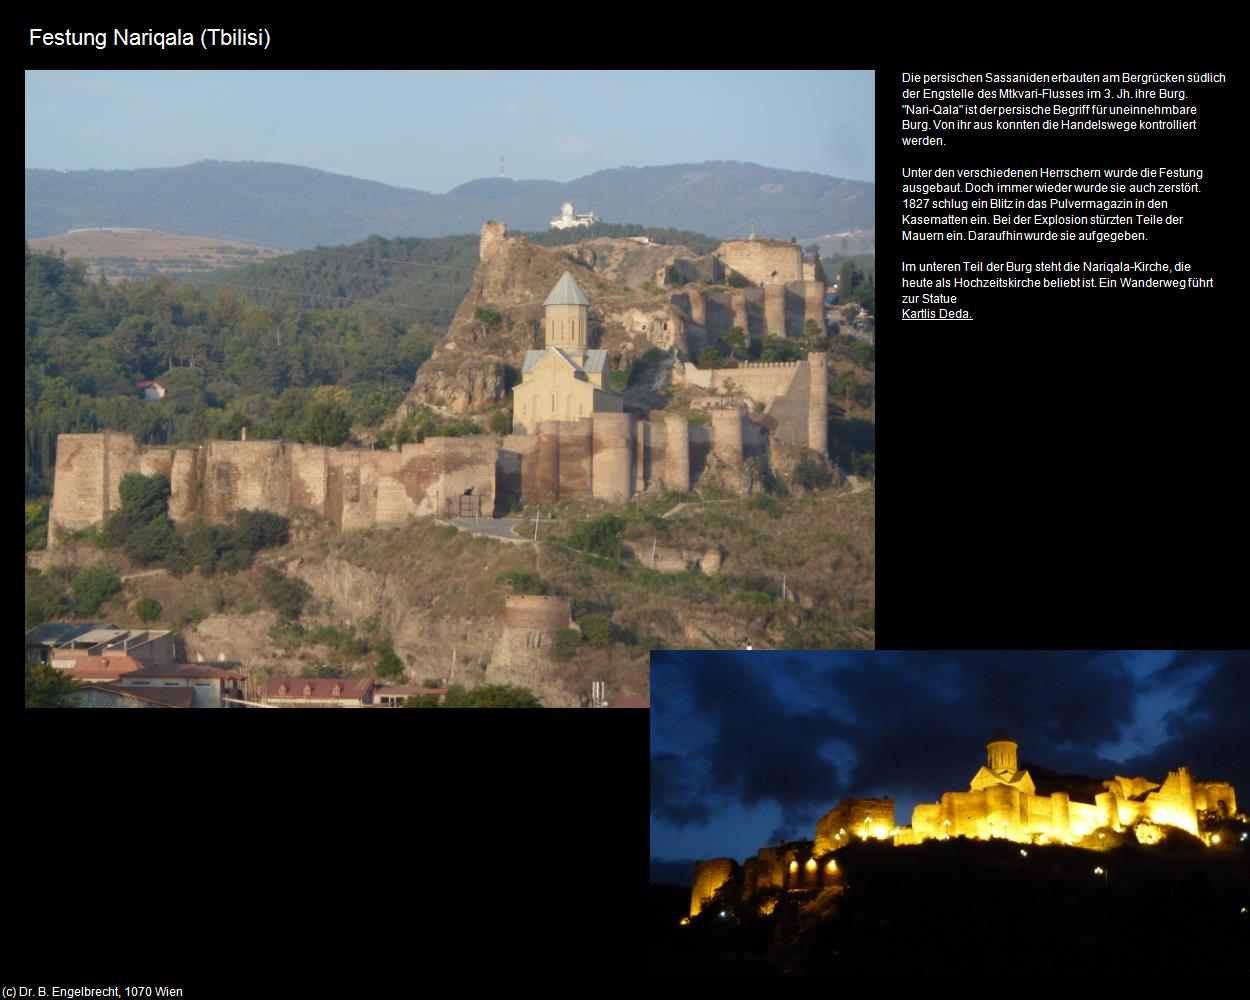 Festung Nariqala  (Tbilisi) in GEORGIEN(c)B.Engelbrecht